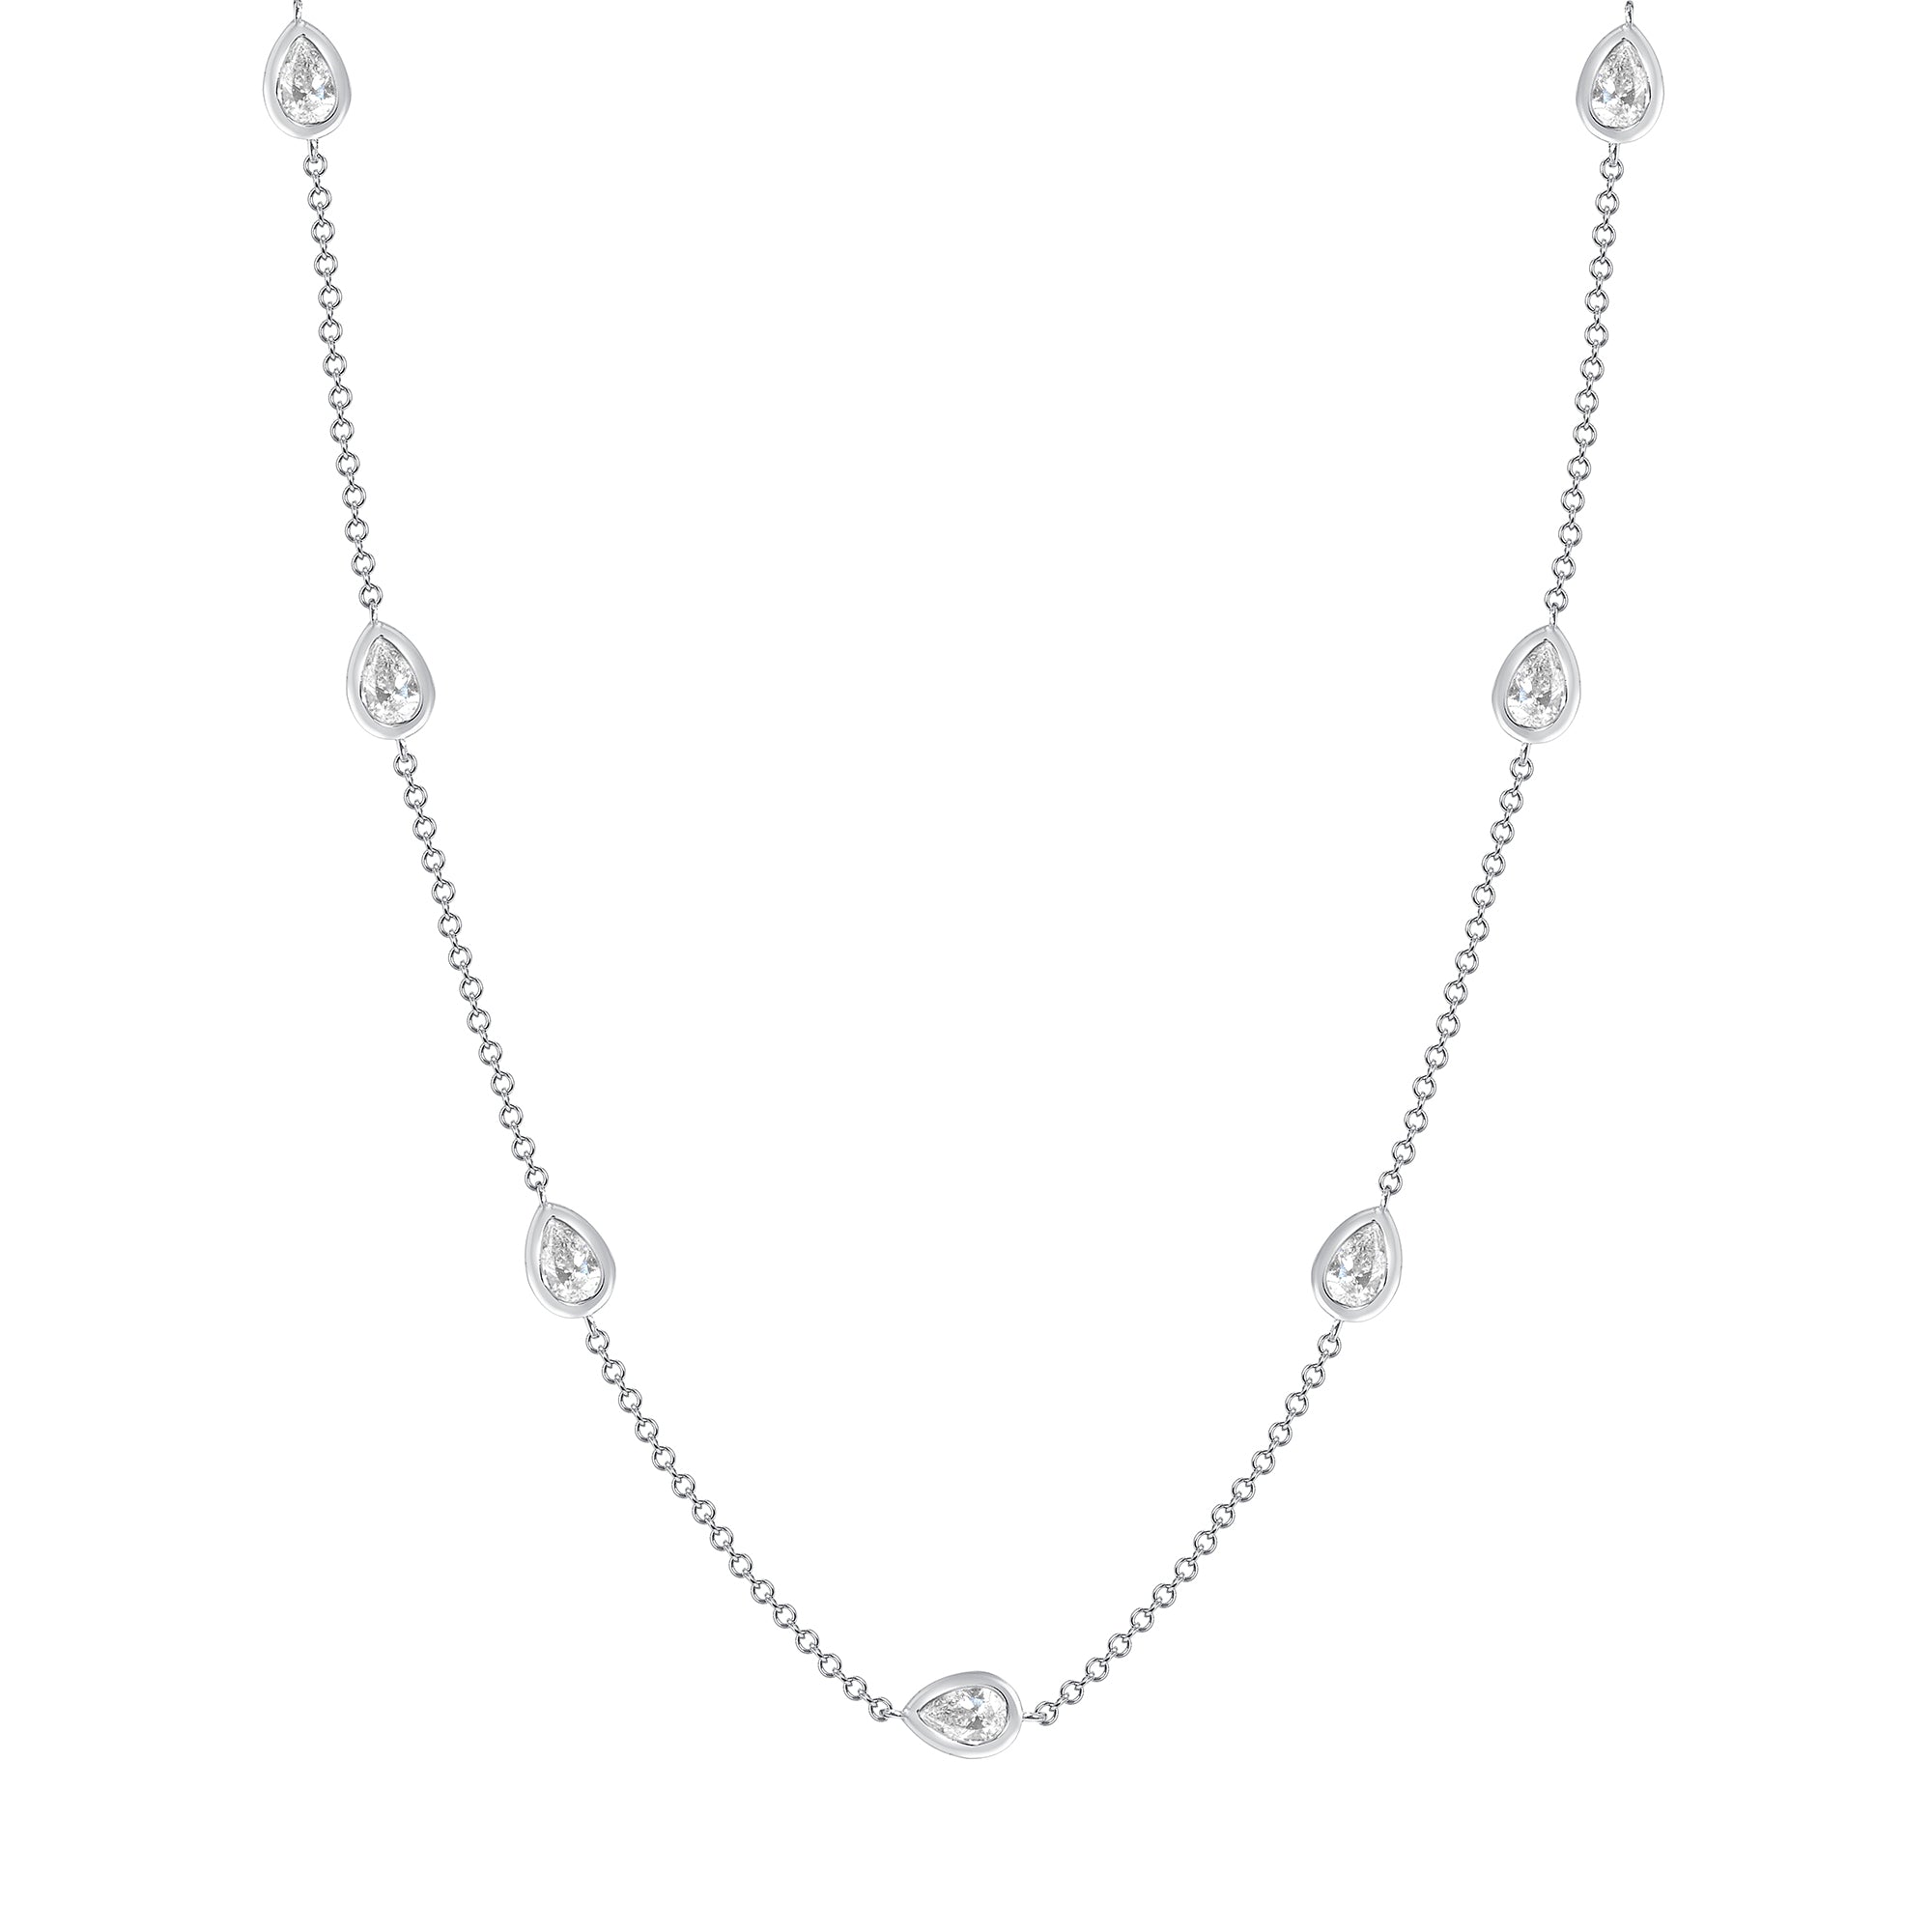 3.42 CT. Pear Cut Diamond Bezel Set Necklace in 14K White Gold.